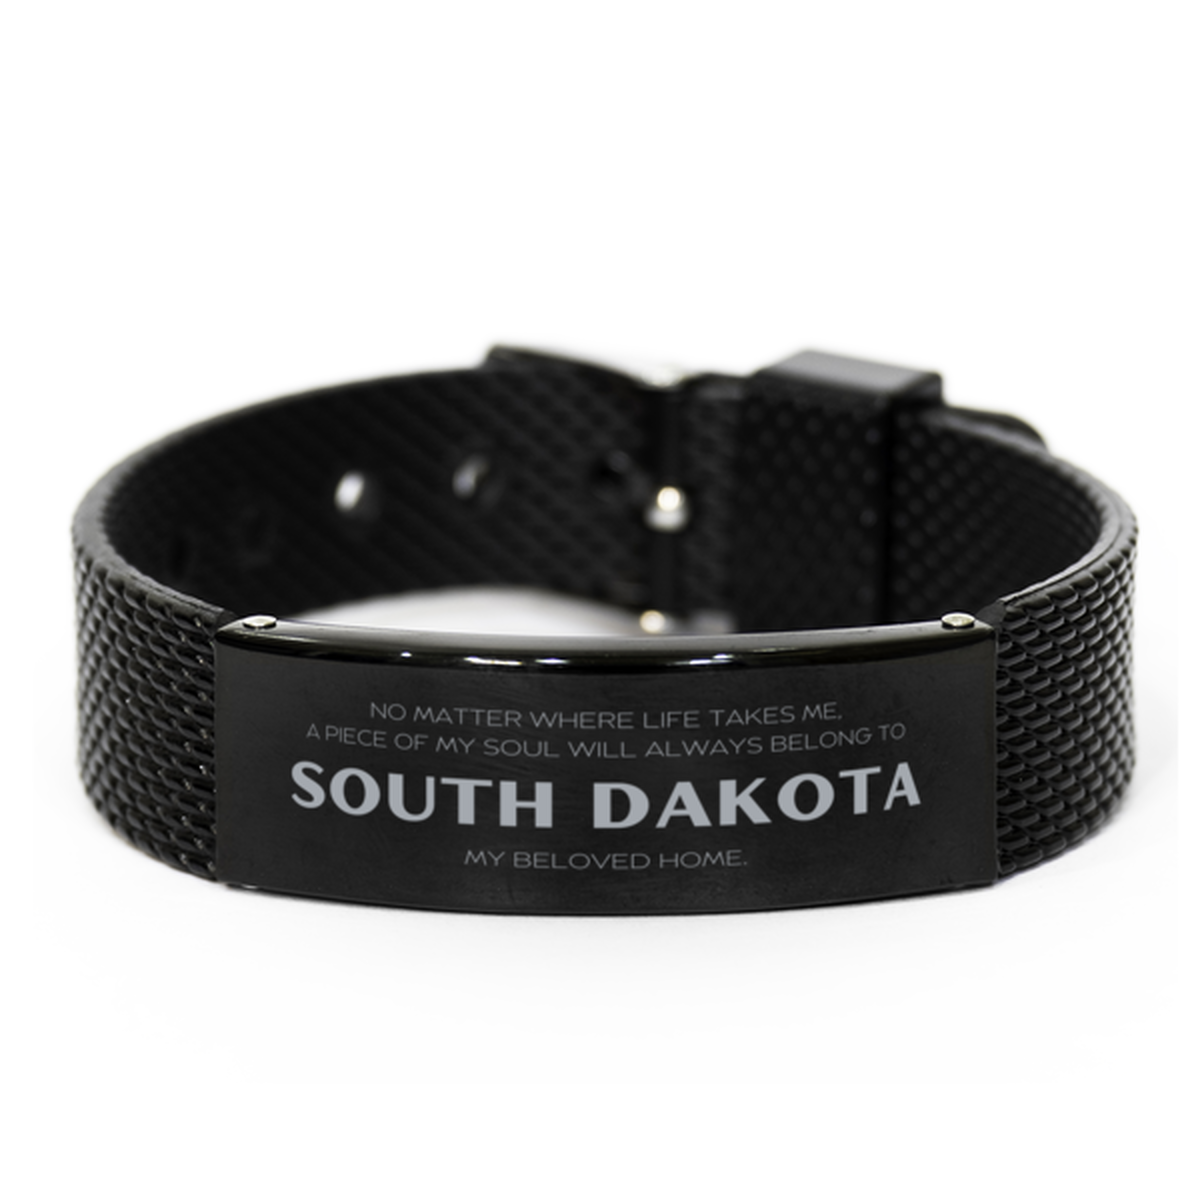 Love South Dakota State Gifts, My soul will always belong to South Dakota, Proud Black Shark Mesh Bracelet, Birthday Unique Gifts For South Dakota Men, Women, Friends